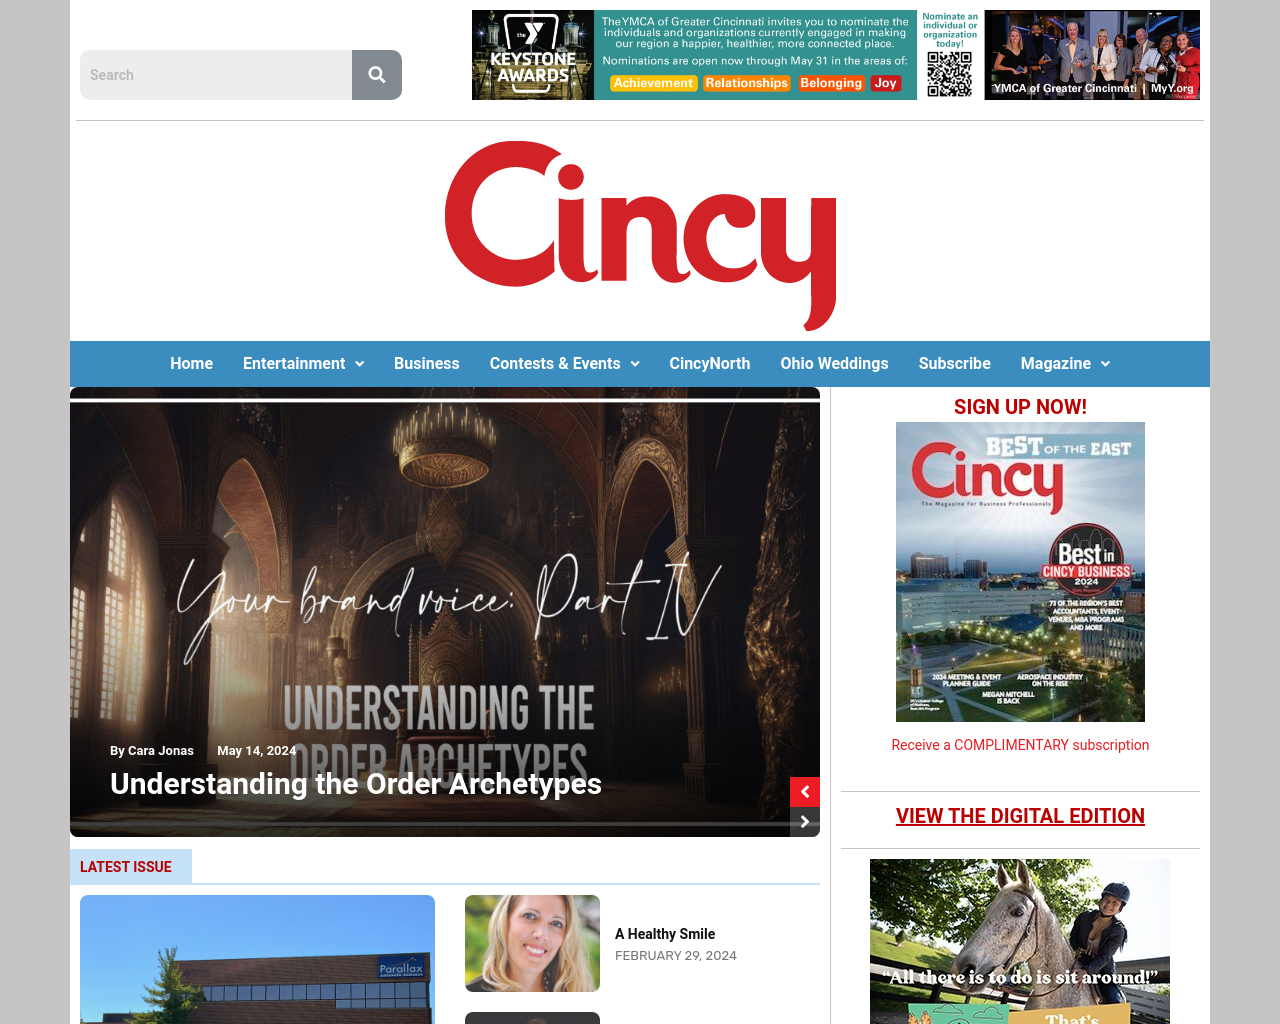 cincymagazine.com